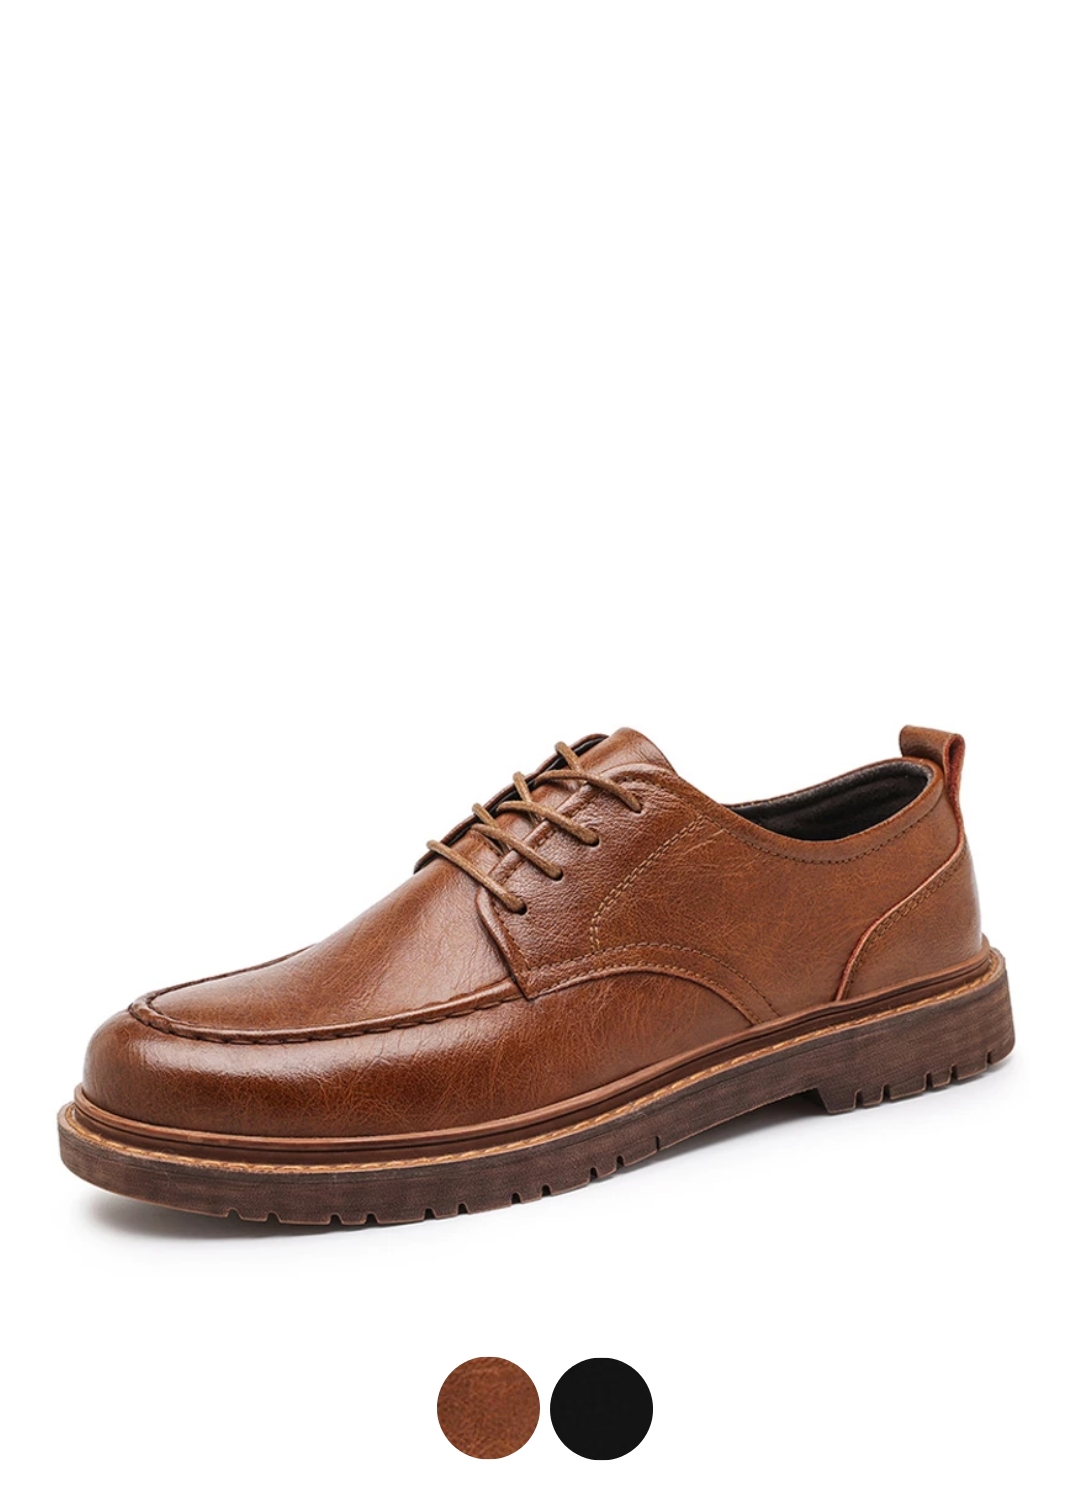 Carlos Men's Loafer Shoes